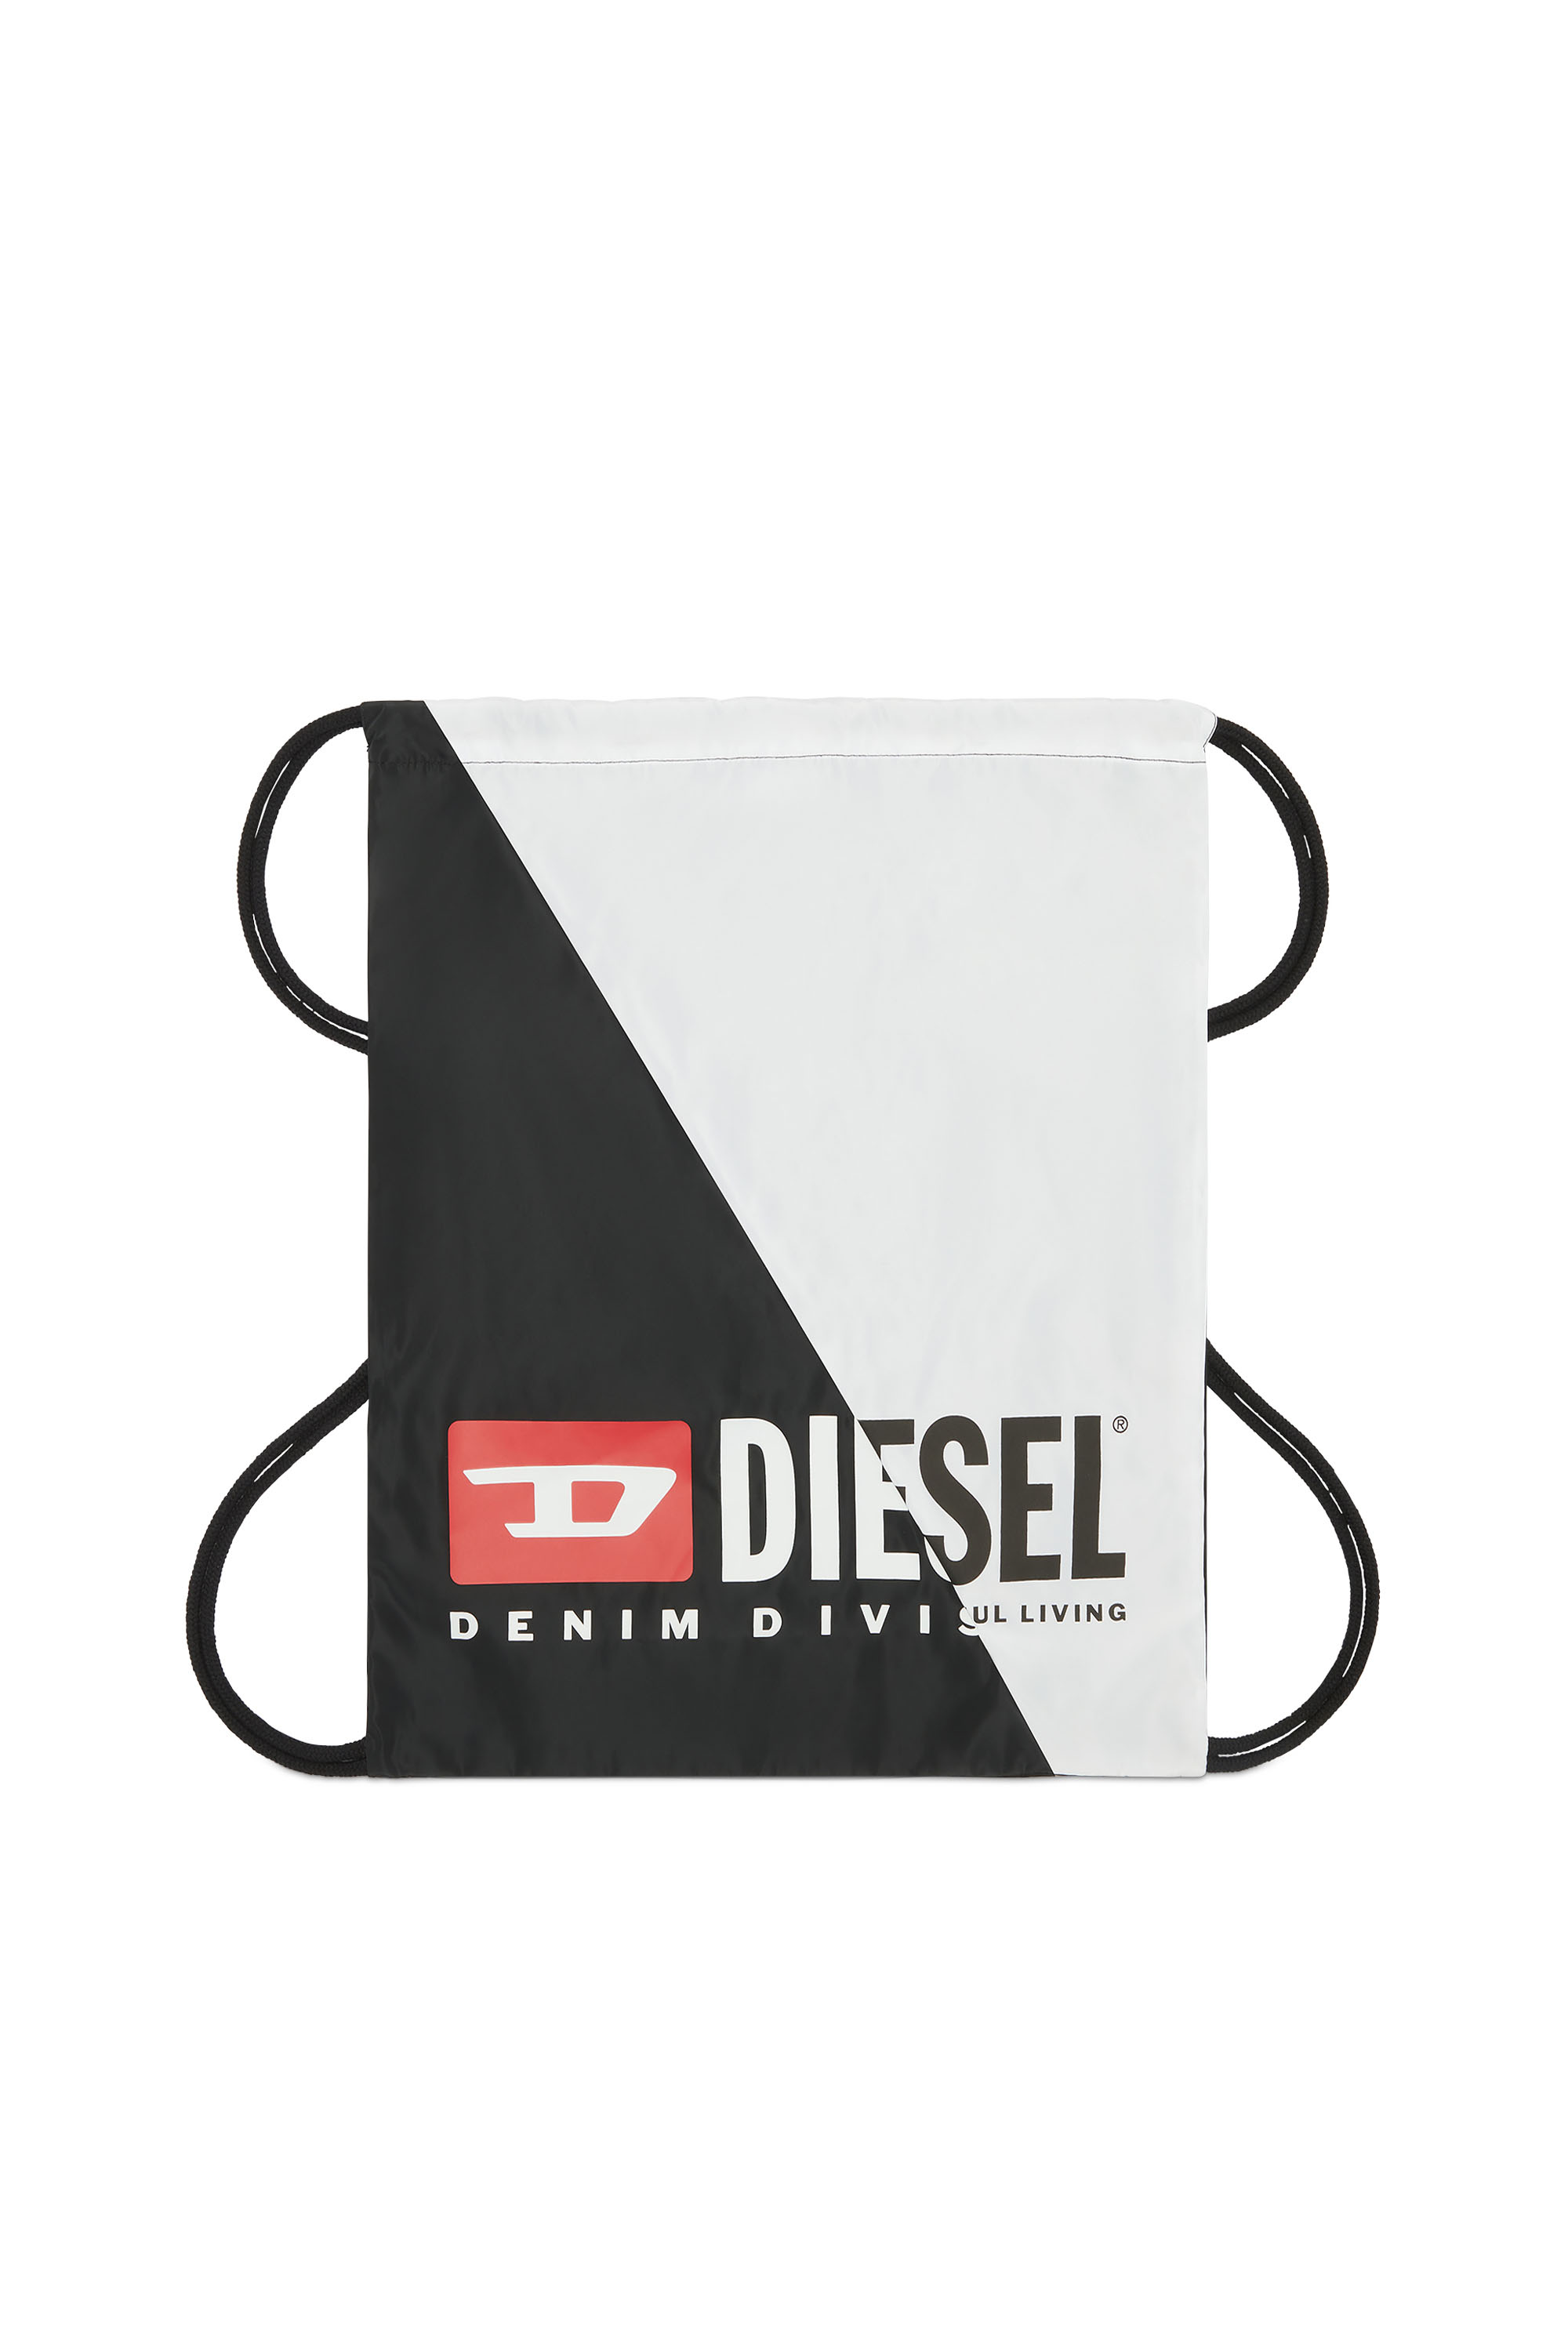 Diesel - WILLY, White/Black - Image 1